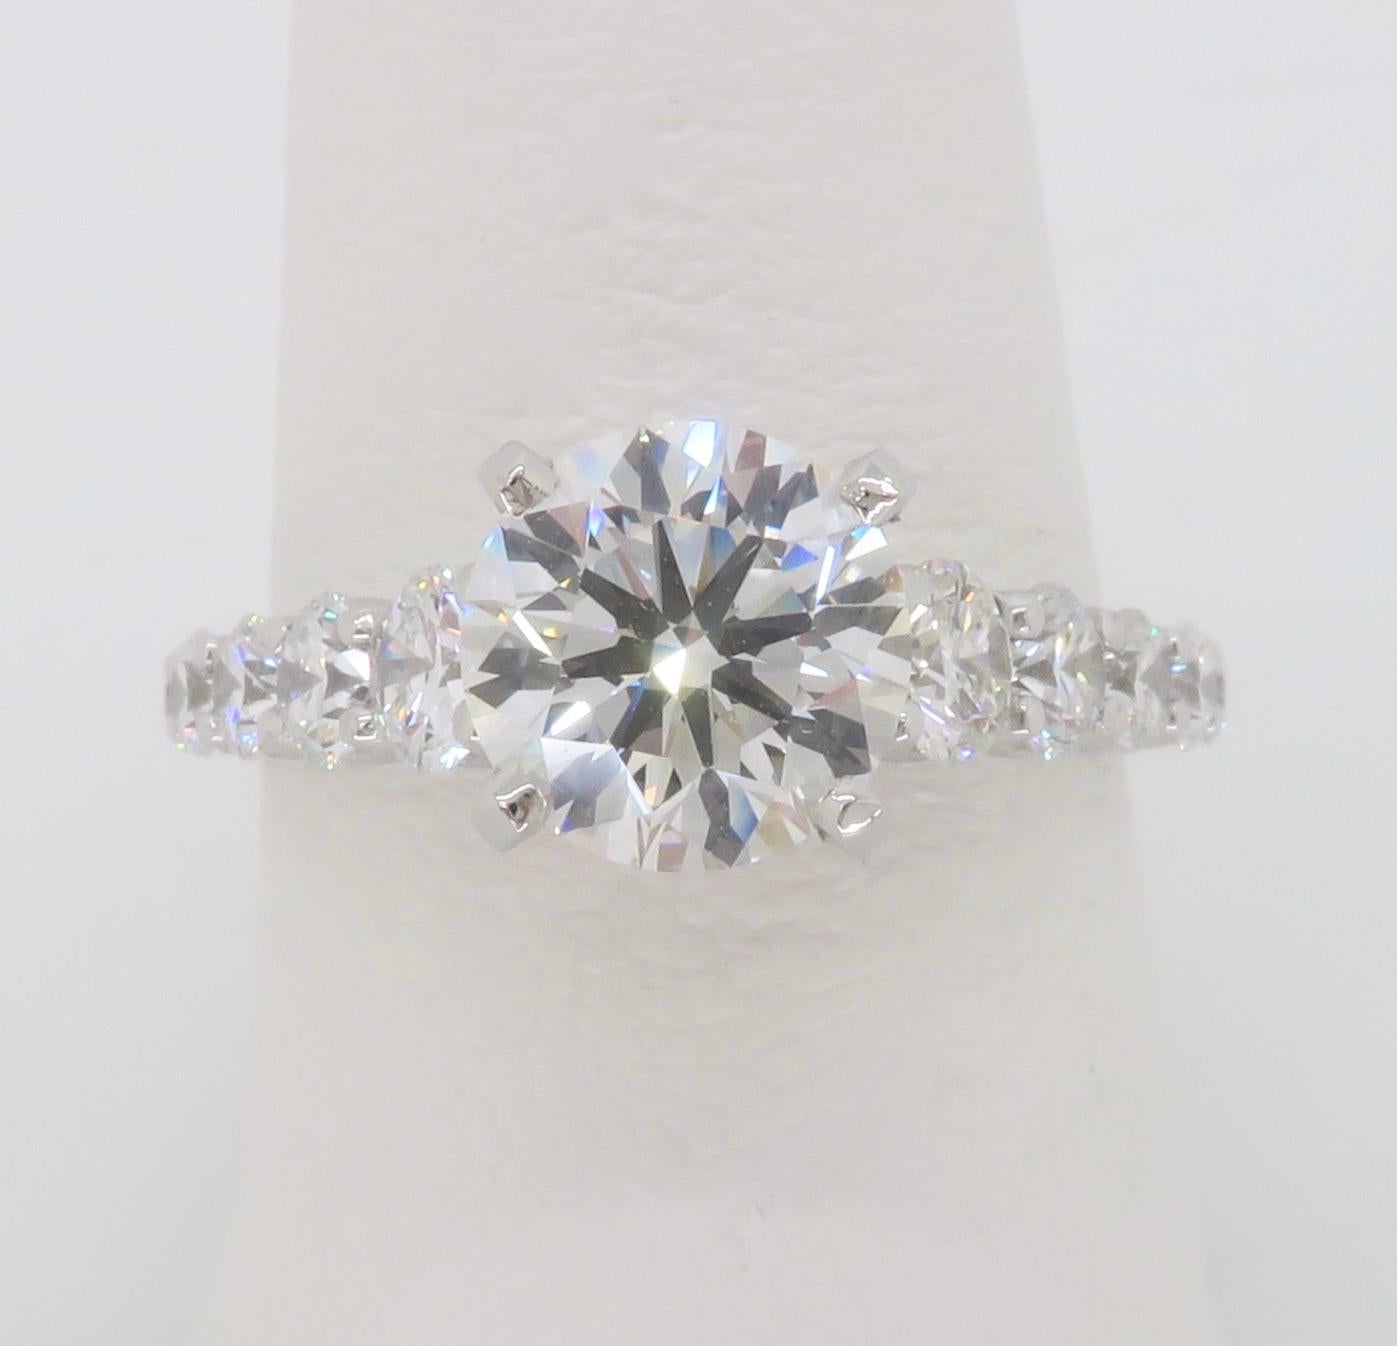 Stunning Platinum Gabriel & Co. 2.42ctw diamond ring set with a GIA certified 1.50ct Round Brilliant cut diamond in the center. 

Center Diamond Carat Weight: 1.50CT
Center Diamond Cut: Round Brilliant
Center Diamond Color: G
Center Diamond Clarity: